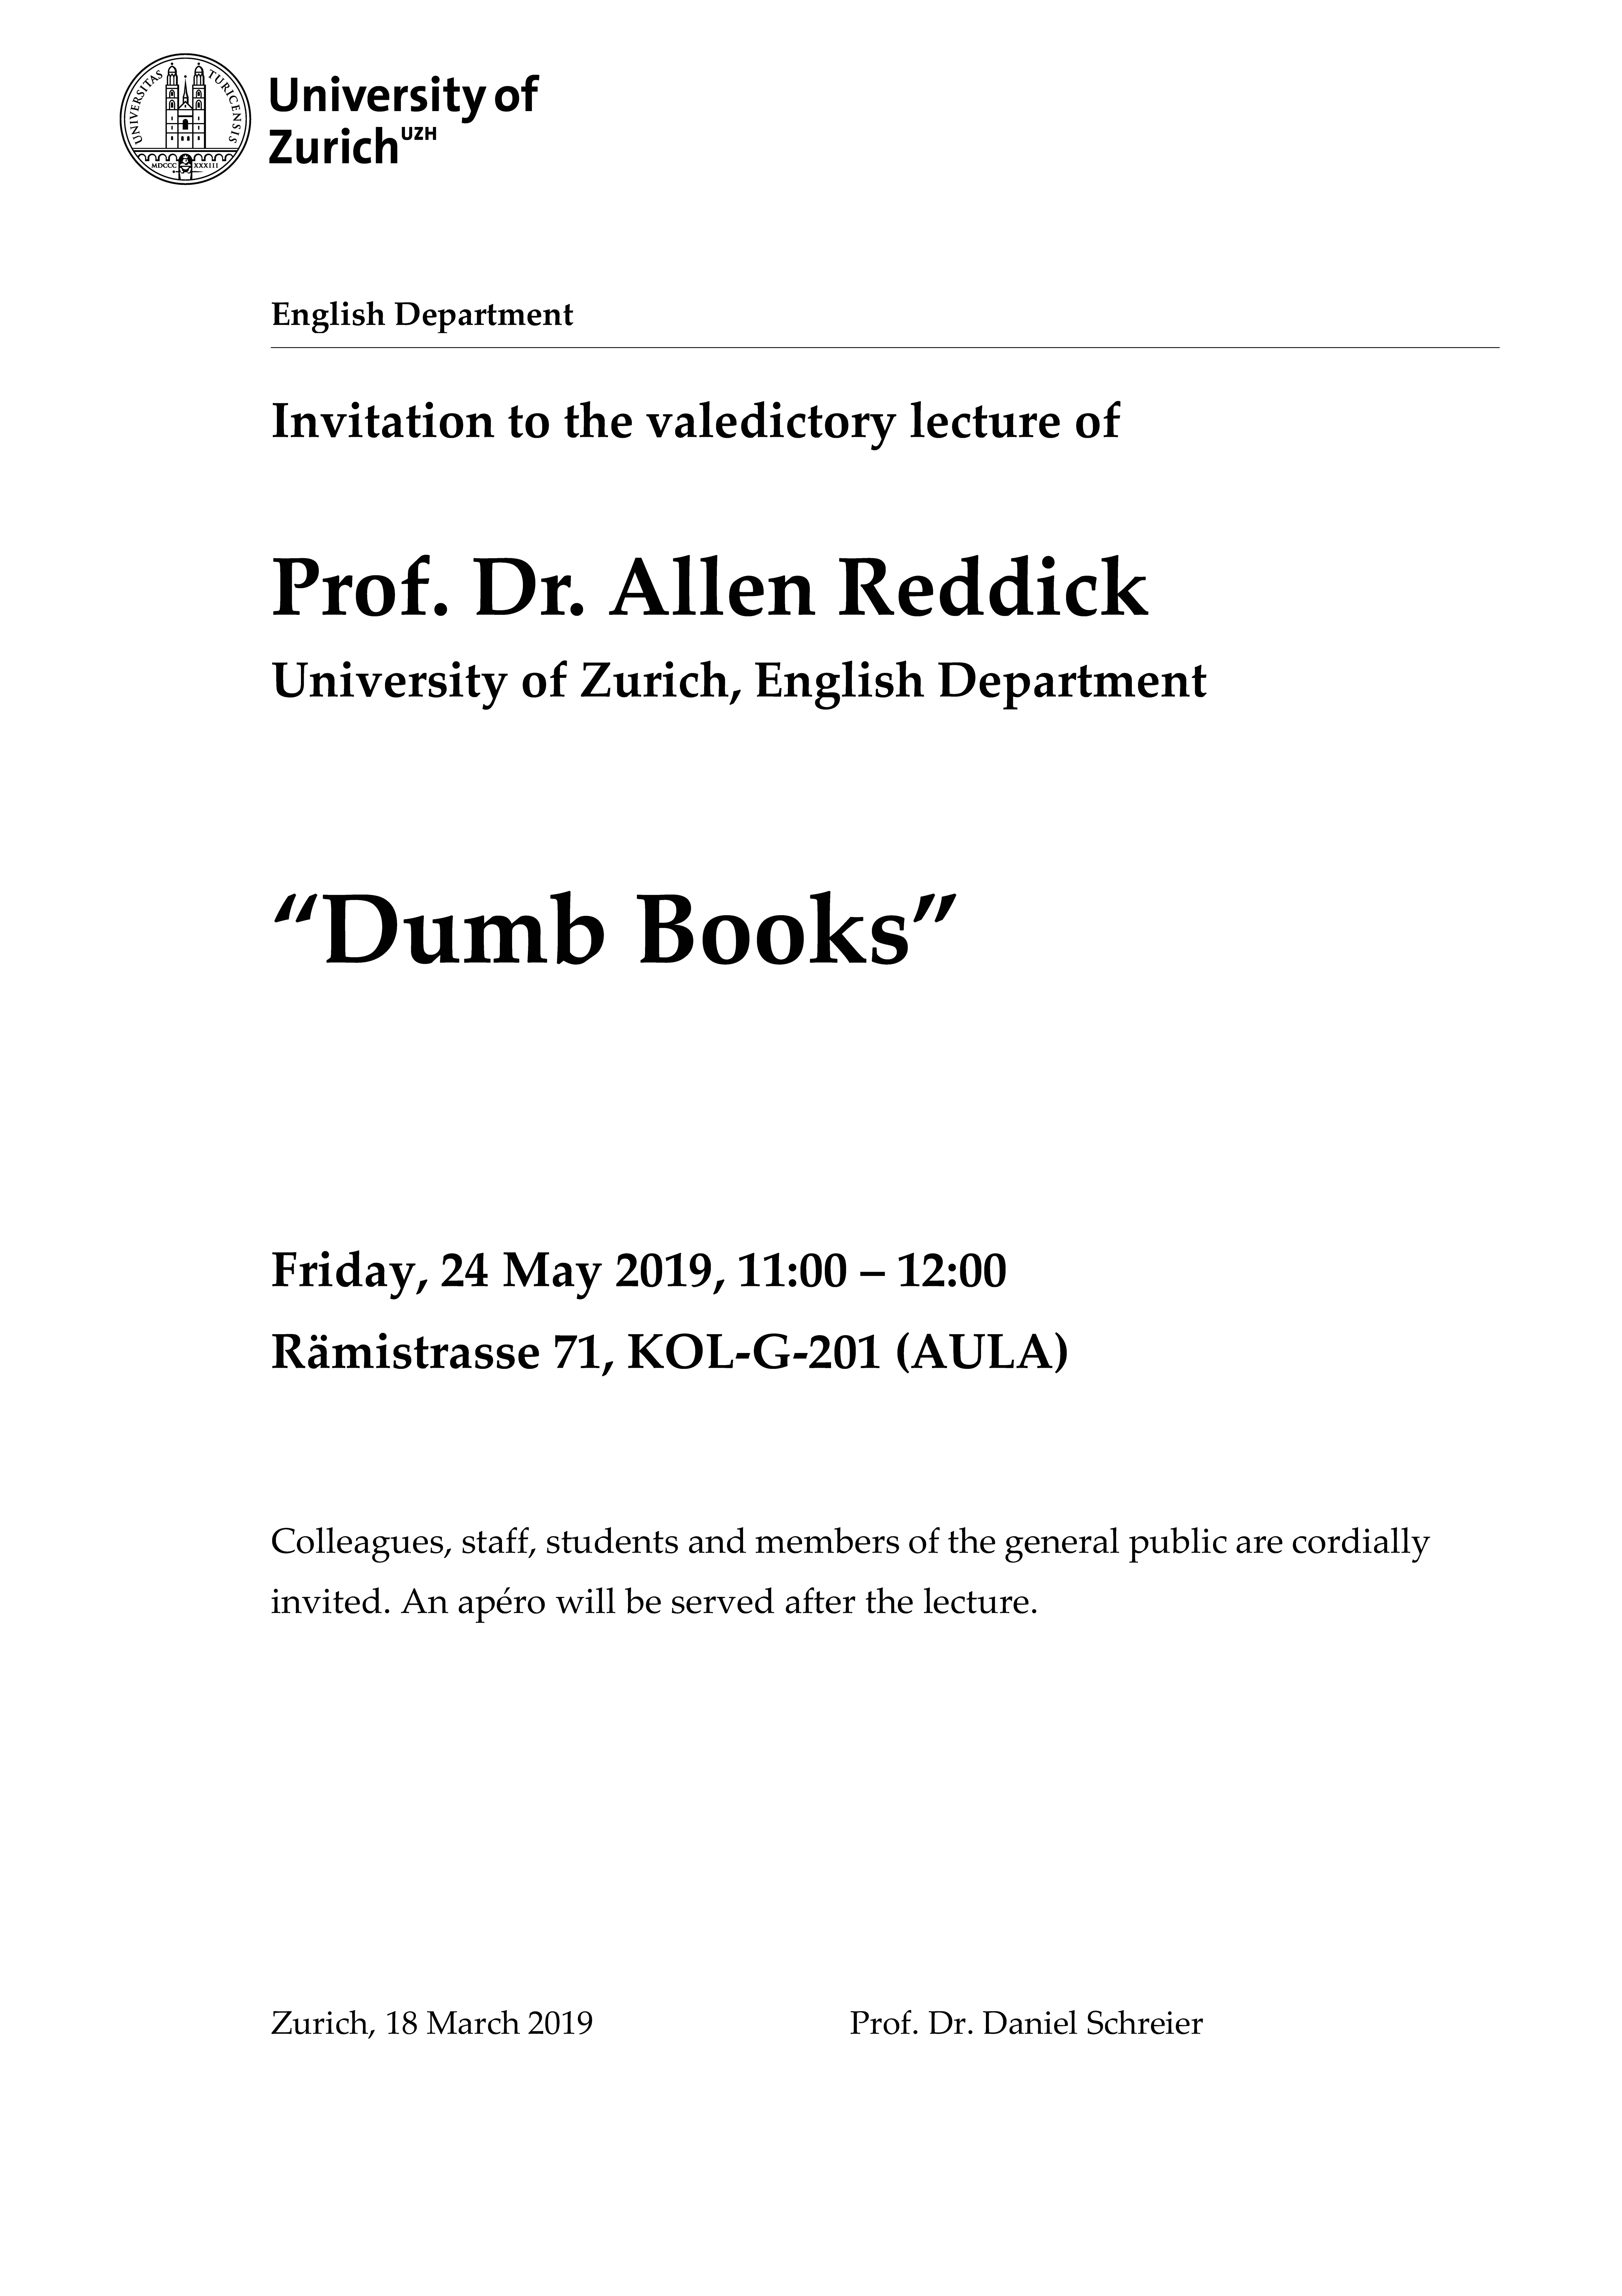 Valedictory Lecture of Prof. Dr. Allen Reddick